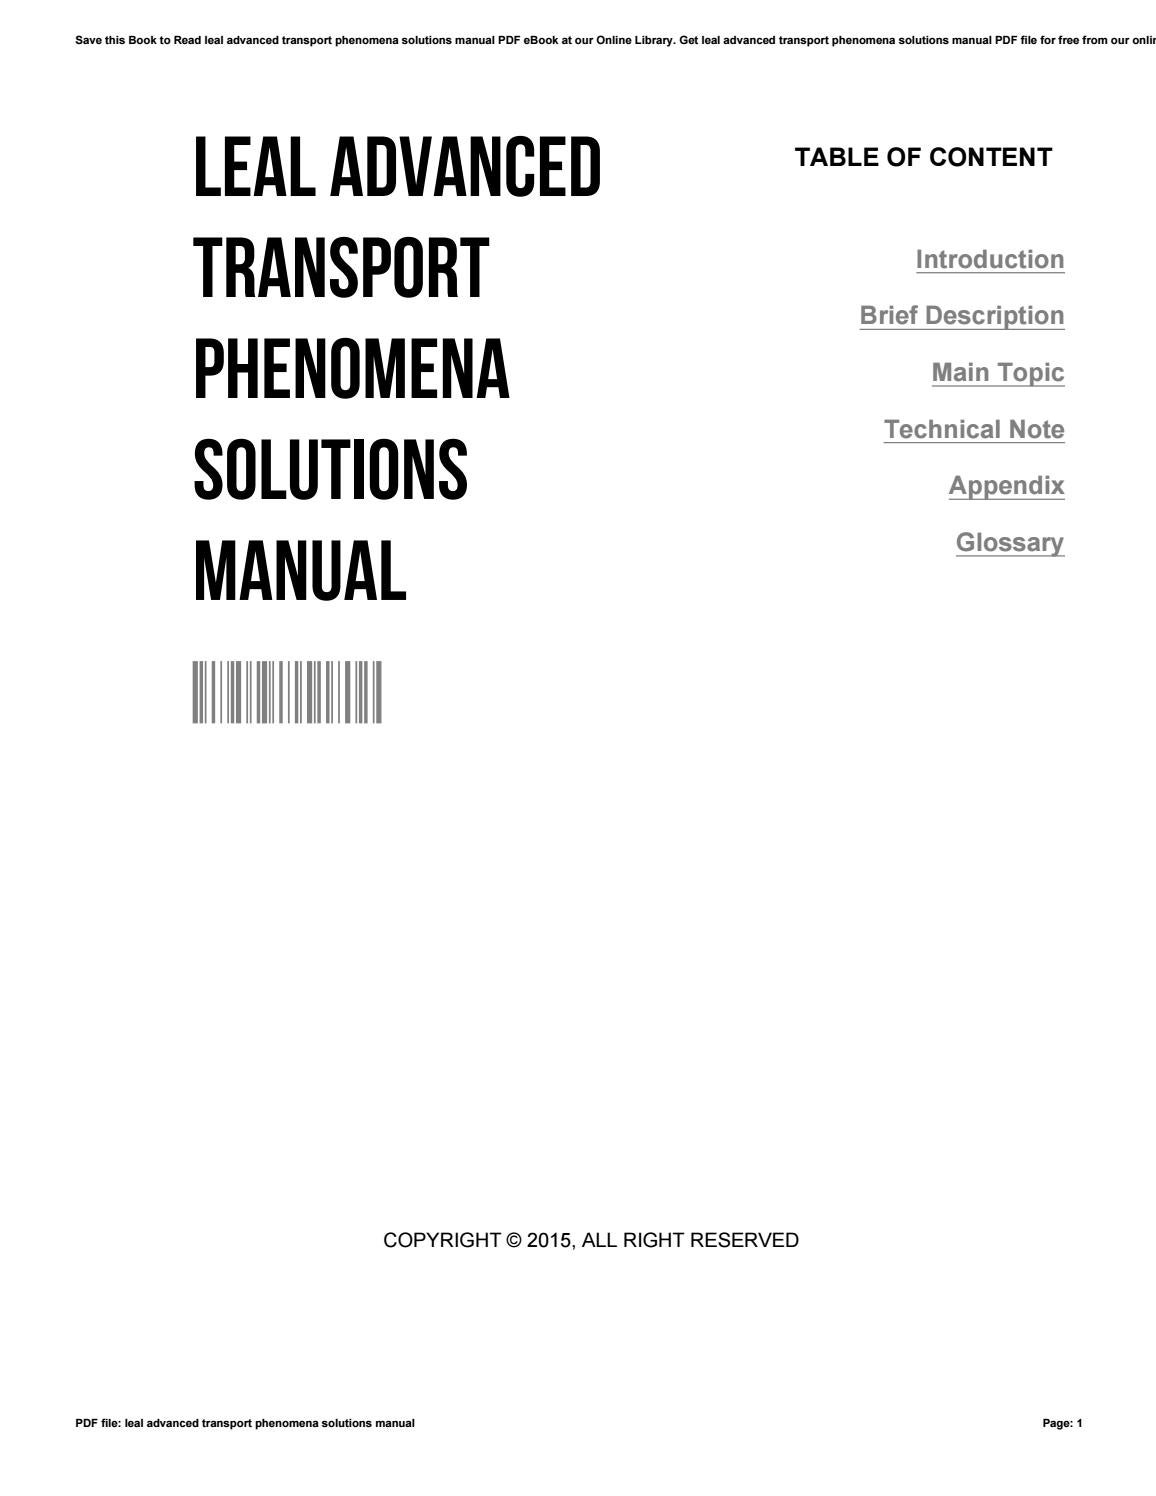 transport phenomena 2nd edition solutions manual